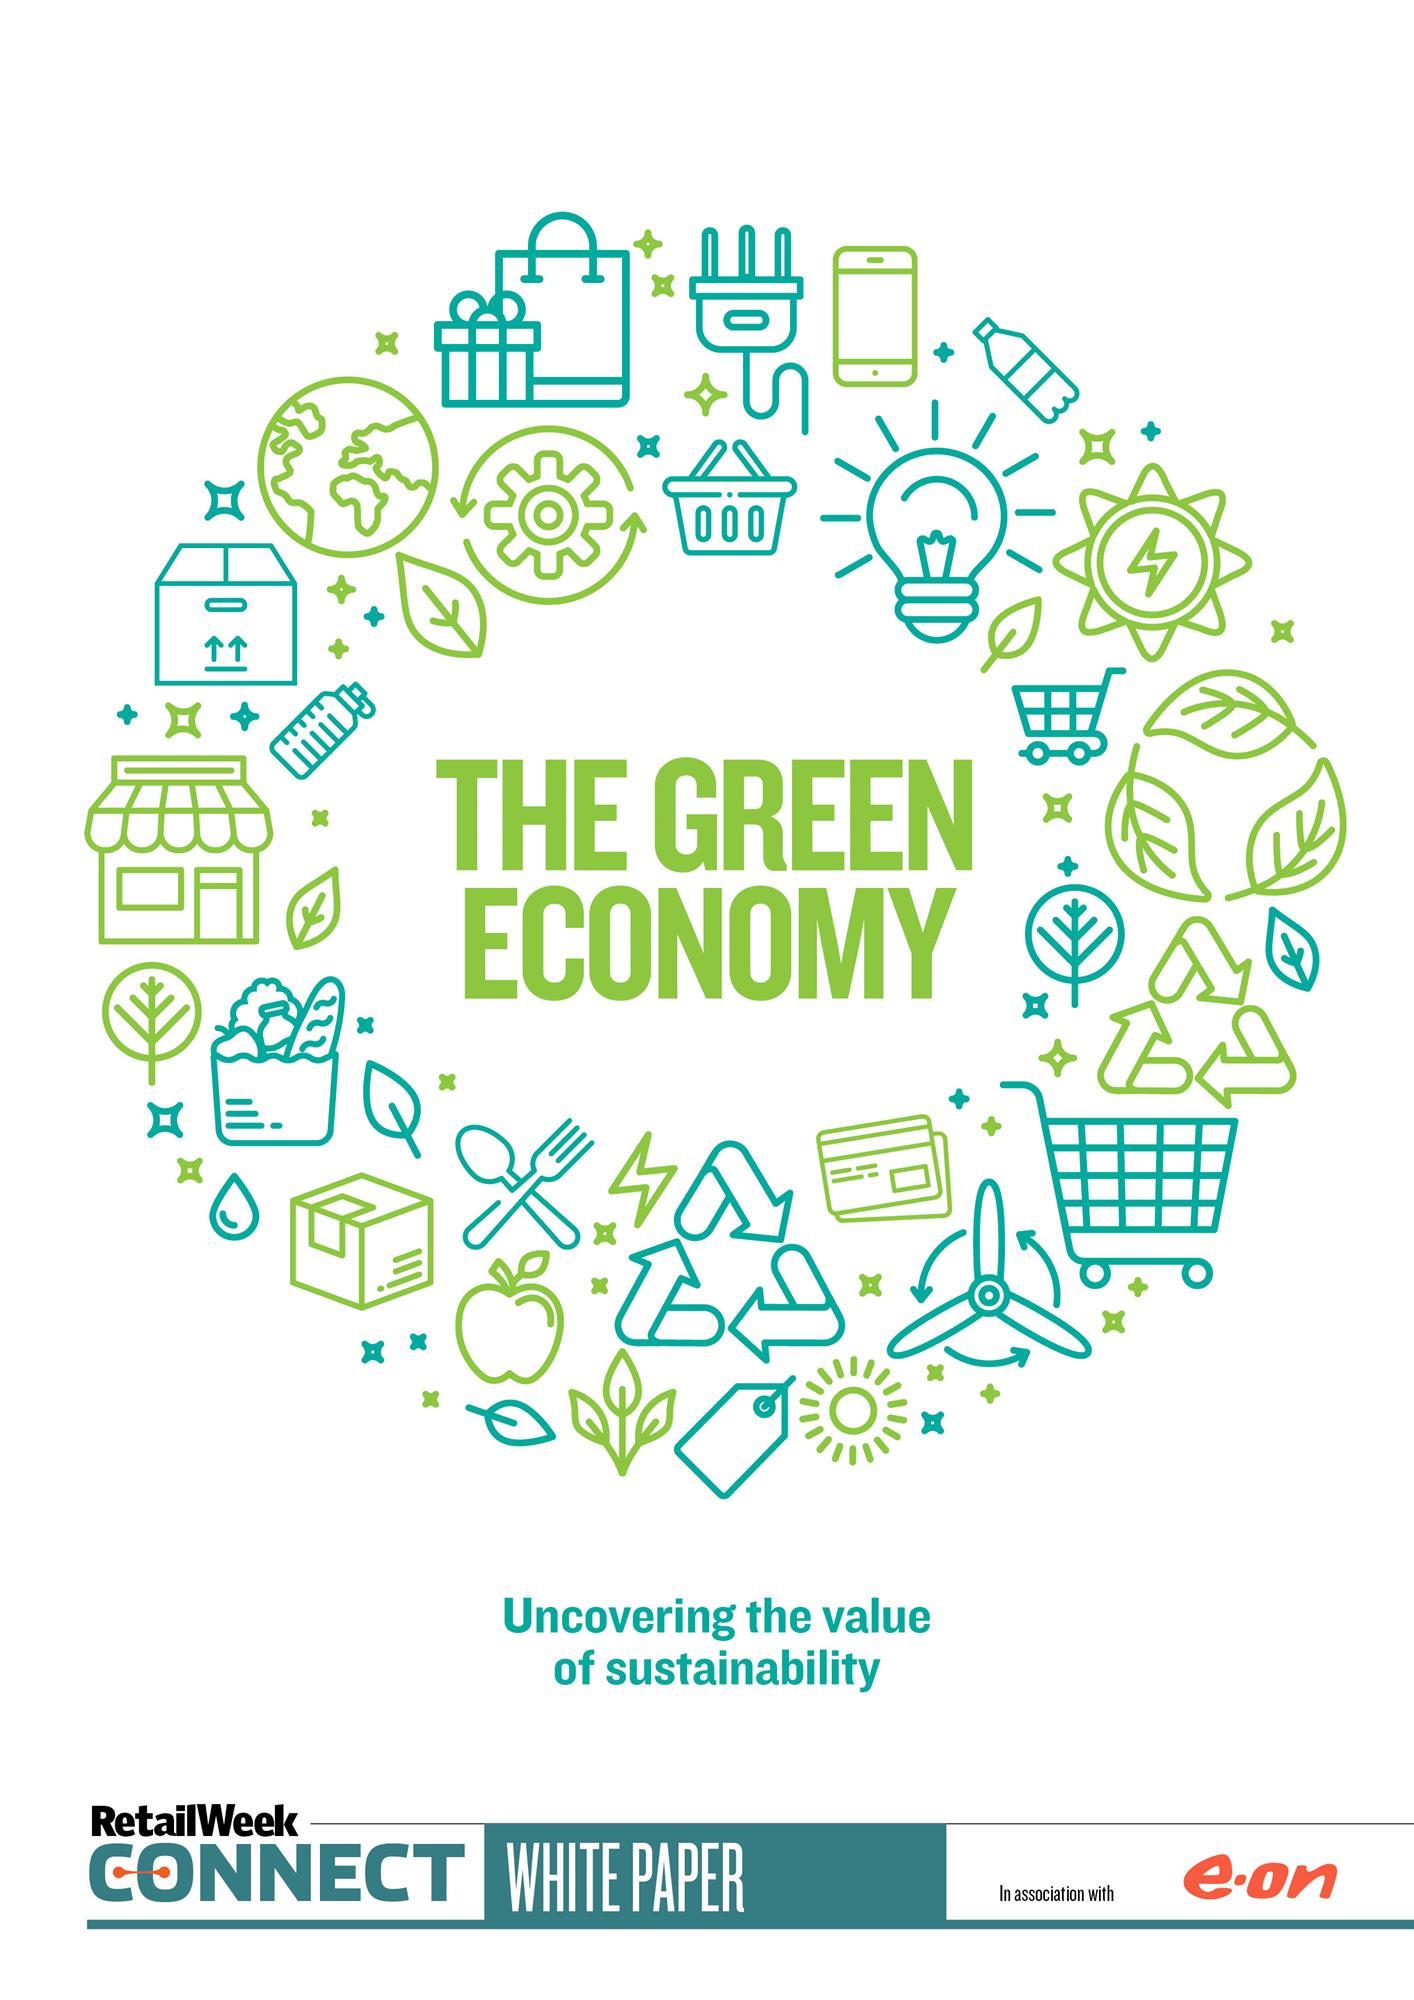 research topics on green economy